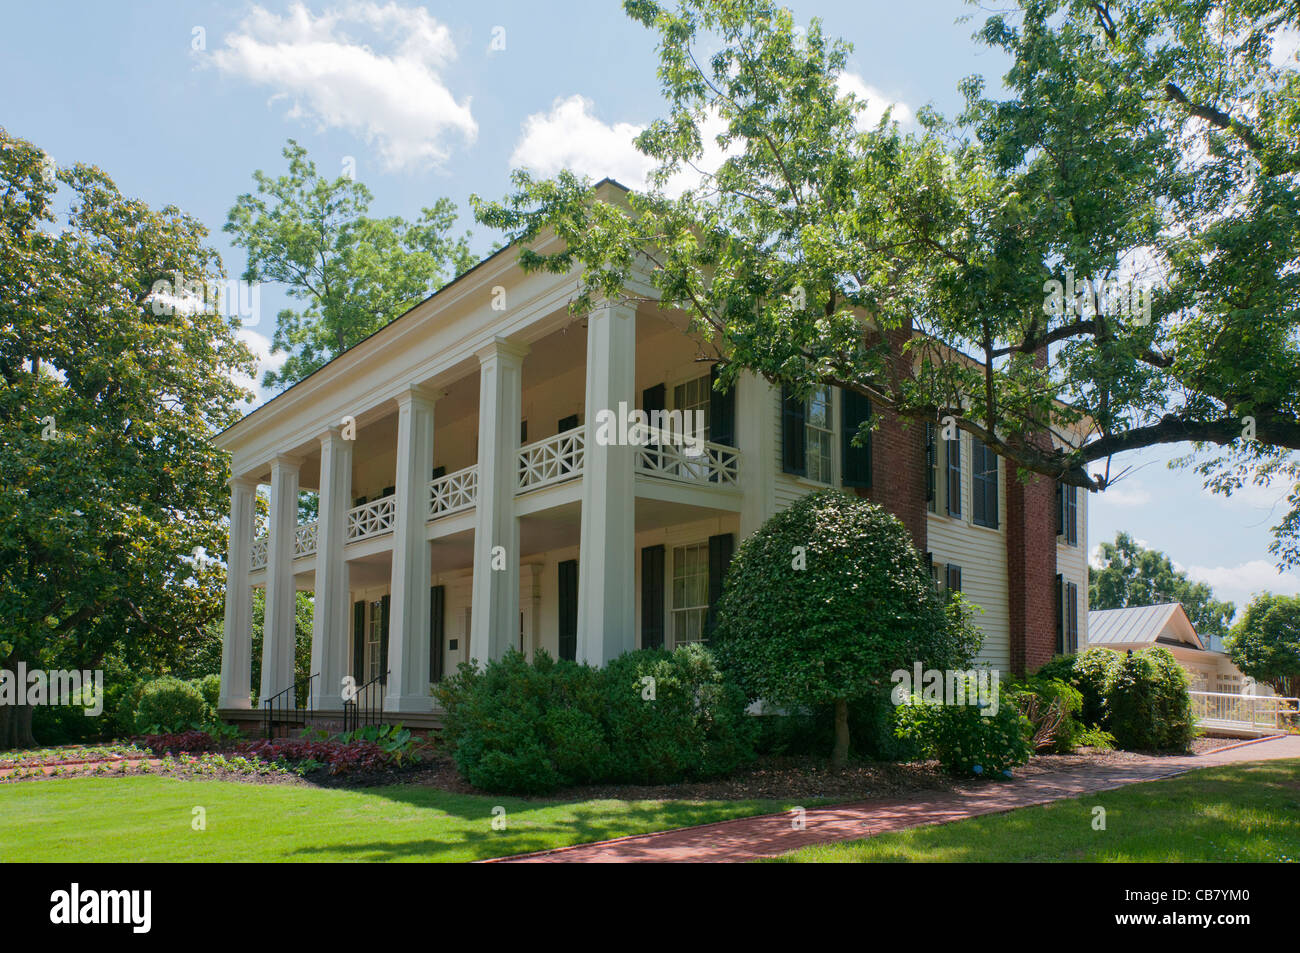 Alabama, Birmingham, Arlington, Birmingham's last remaining Greek Revival antebellum home, circa 1840s Stock Photo